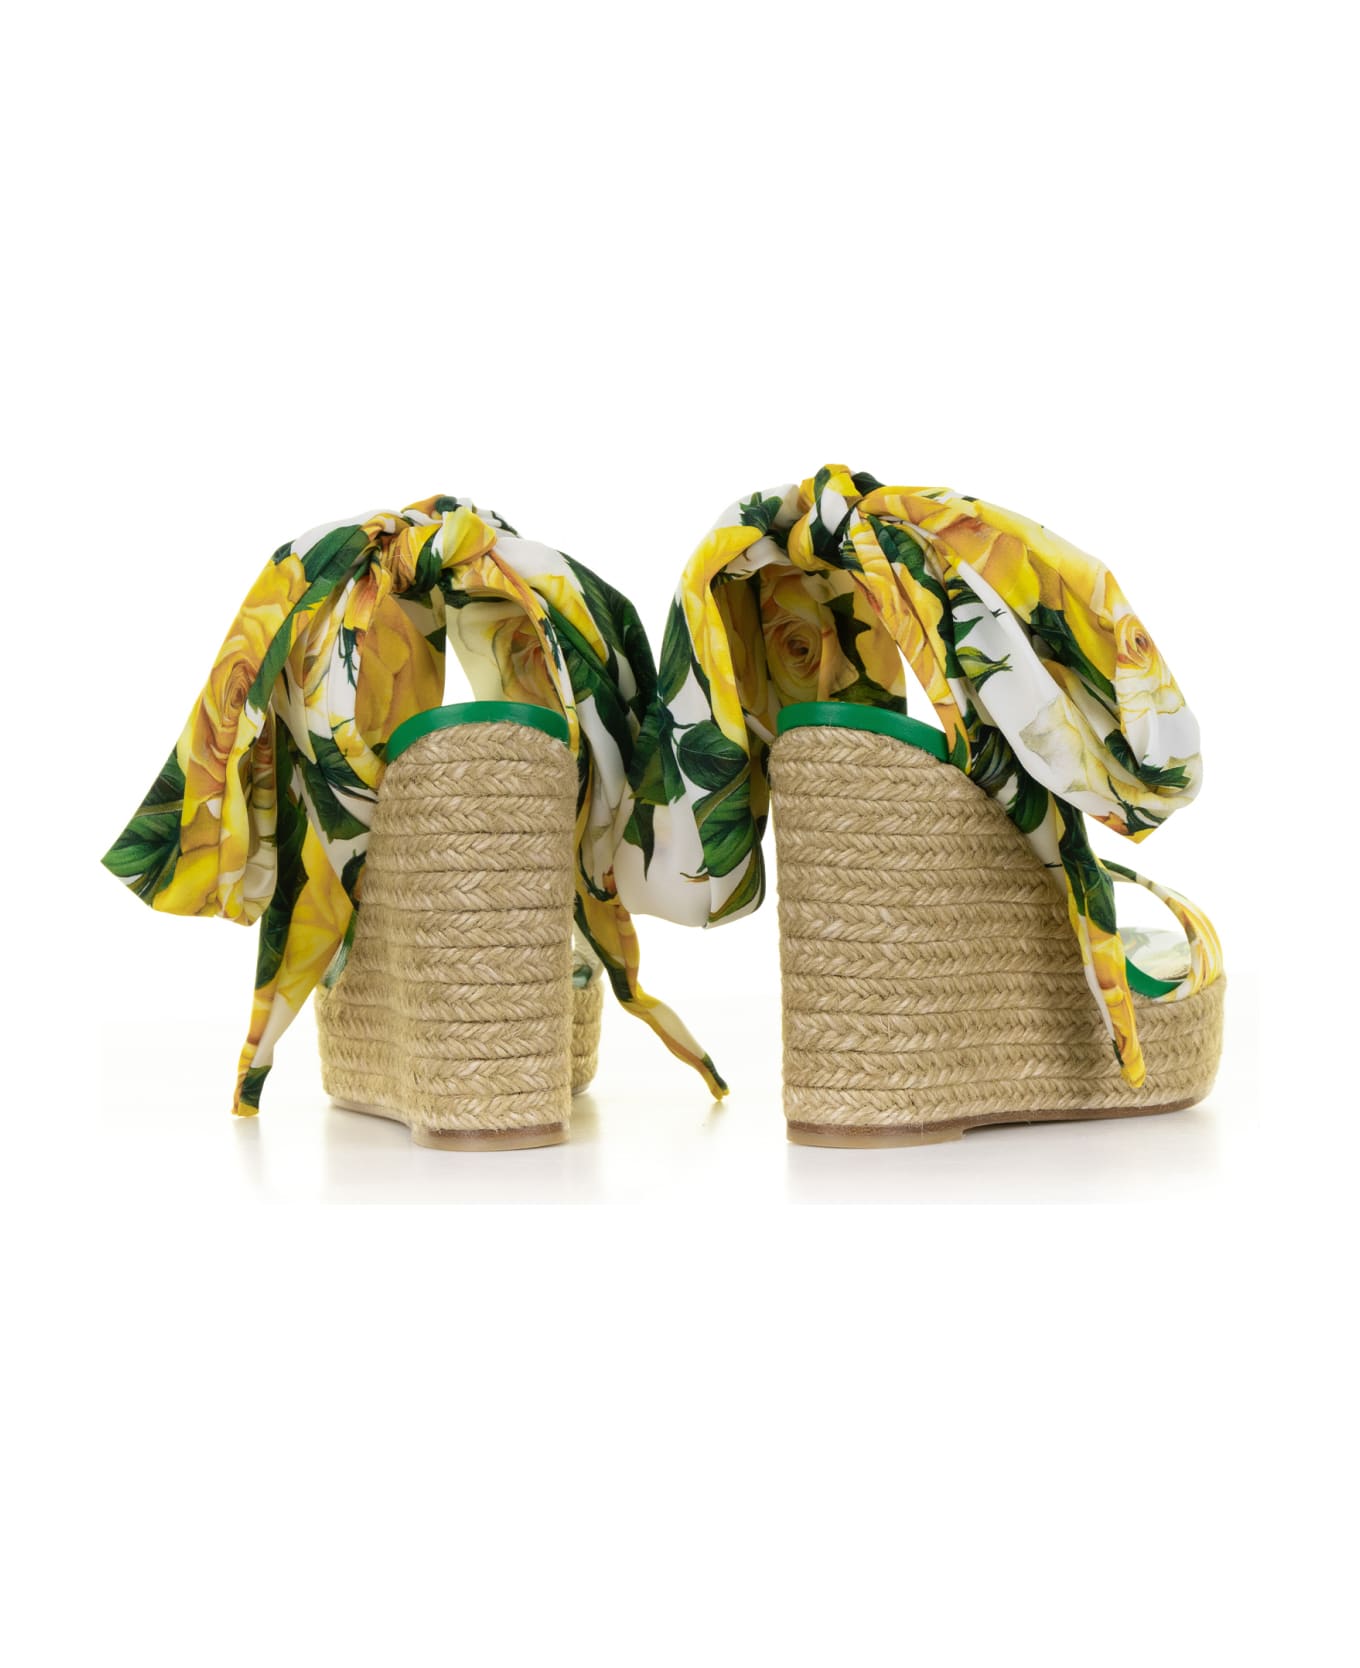 Dolce & Gabbana Flower Patterned Wedge Sandals - Não há opiniões disponíveis para Top 3 Shoes Bota Chelsea